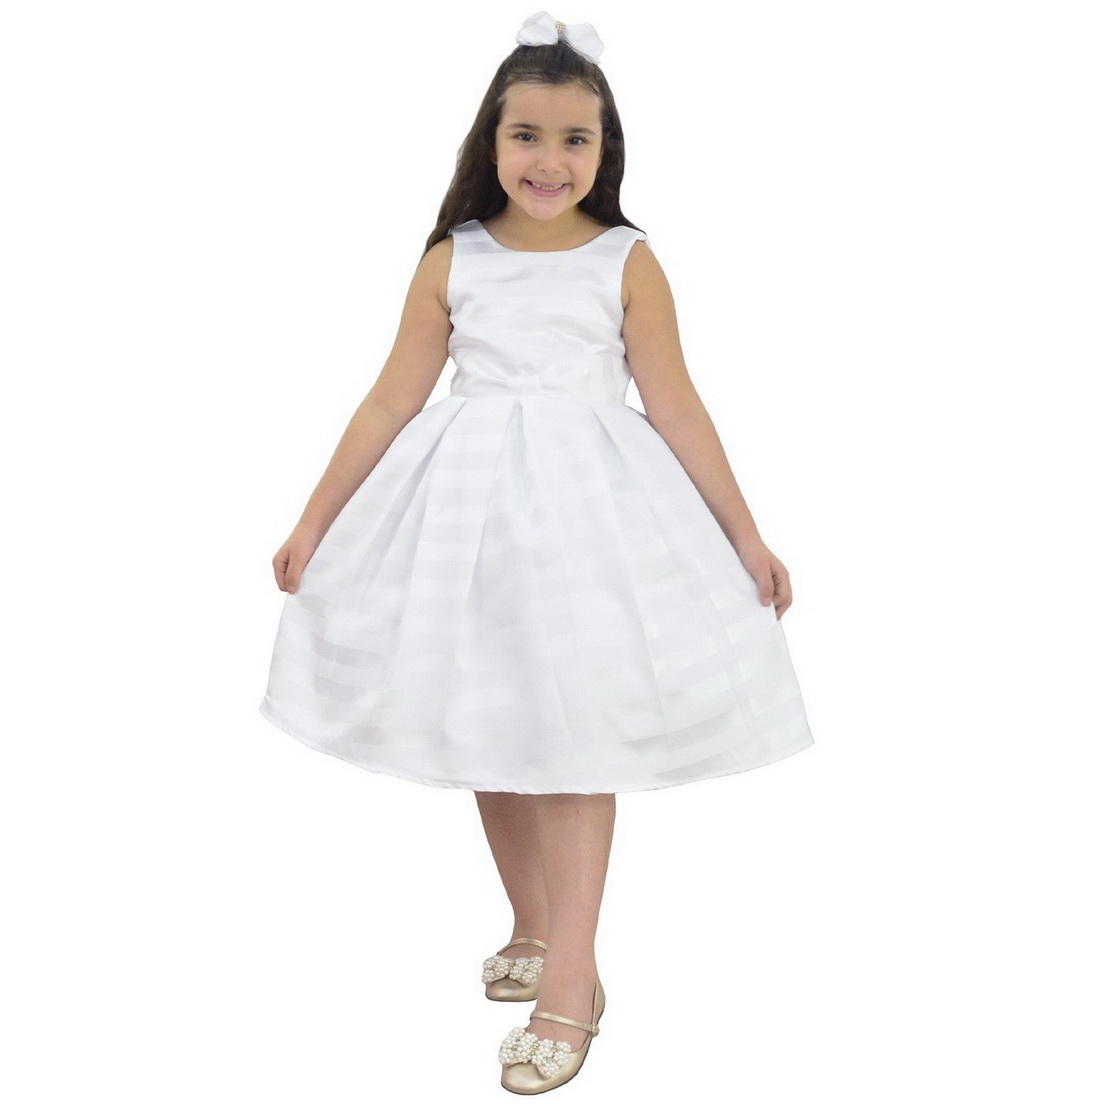 Vestido Branco Infantil - Batizado de Menina - Outlet